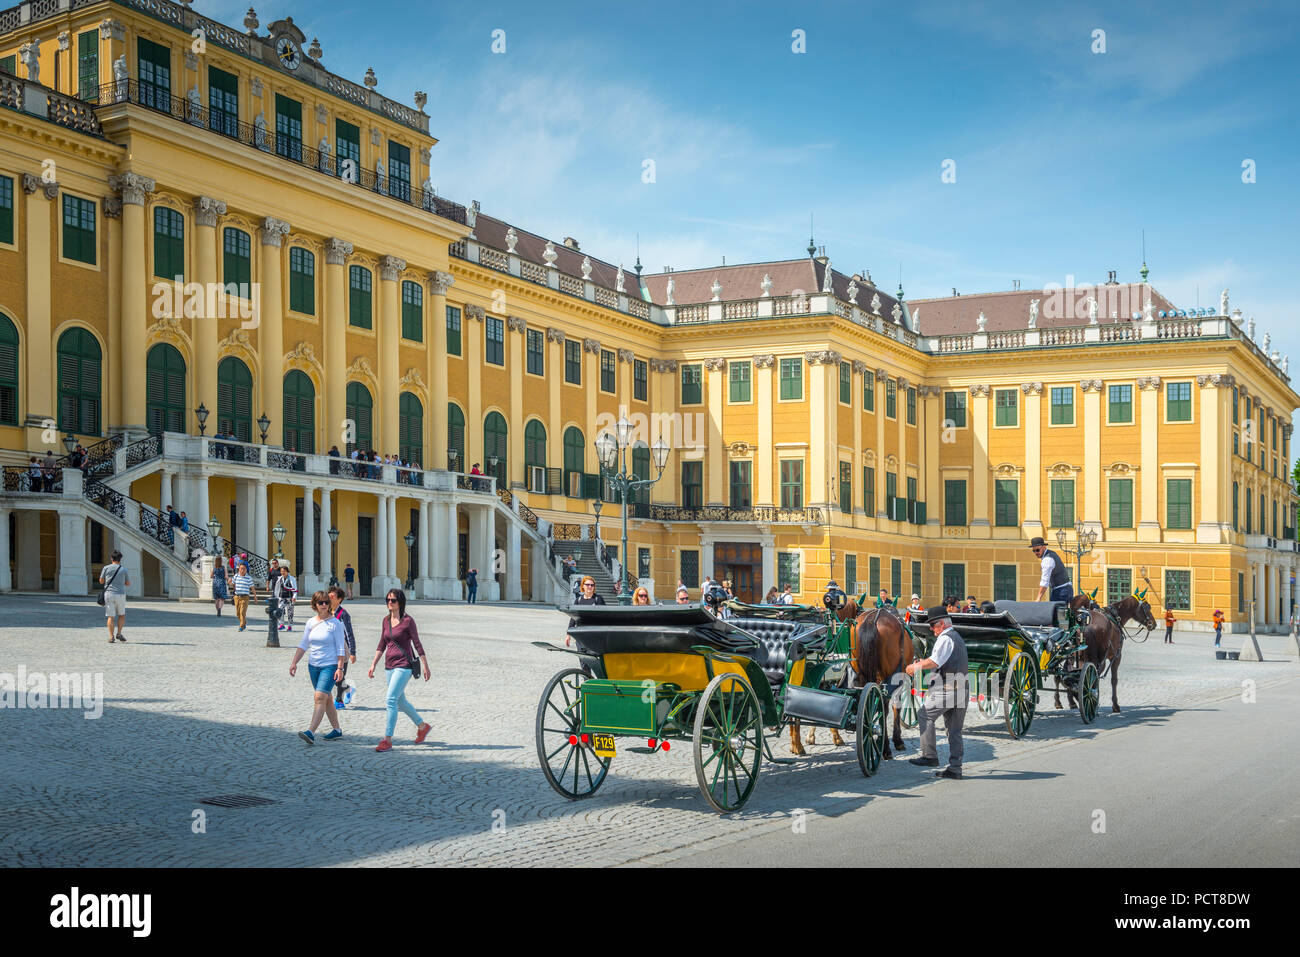 Europa, Österreich, Wien, Schloss, Palast, Schönbrunn, Vienna, Austria, architettura, capitale Foto Stock